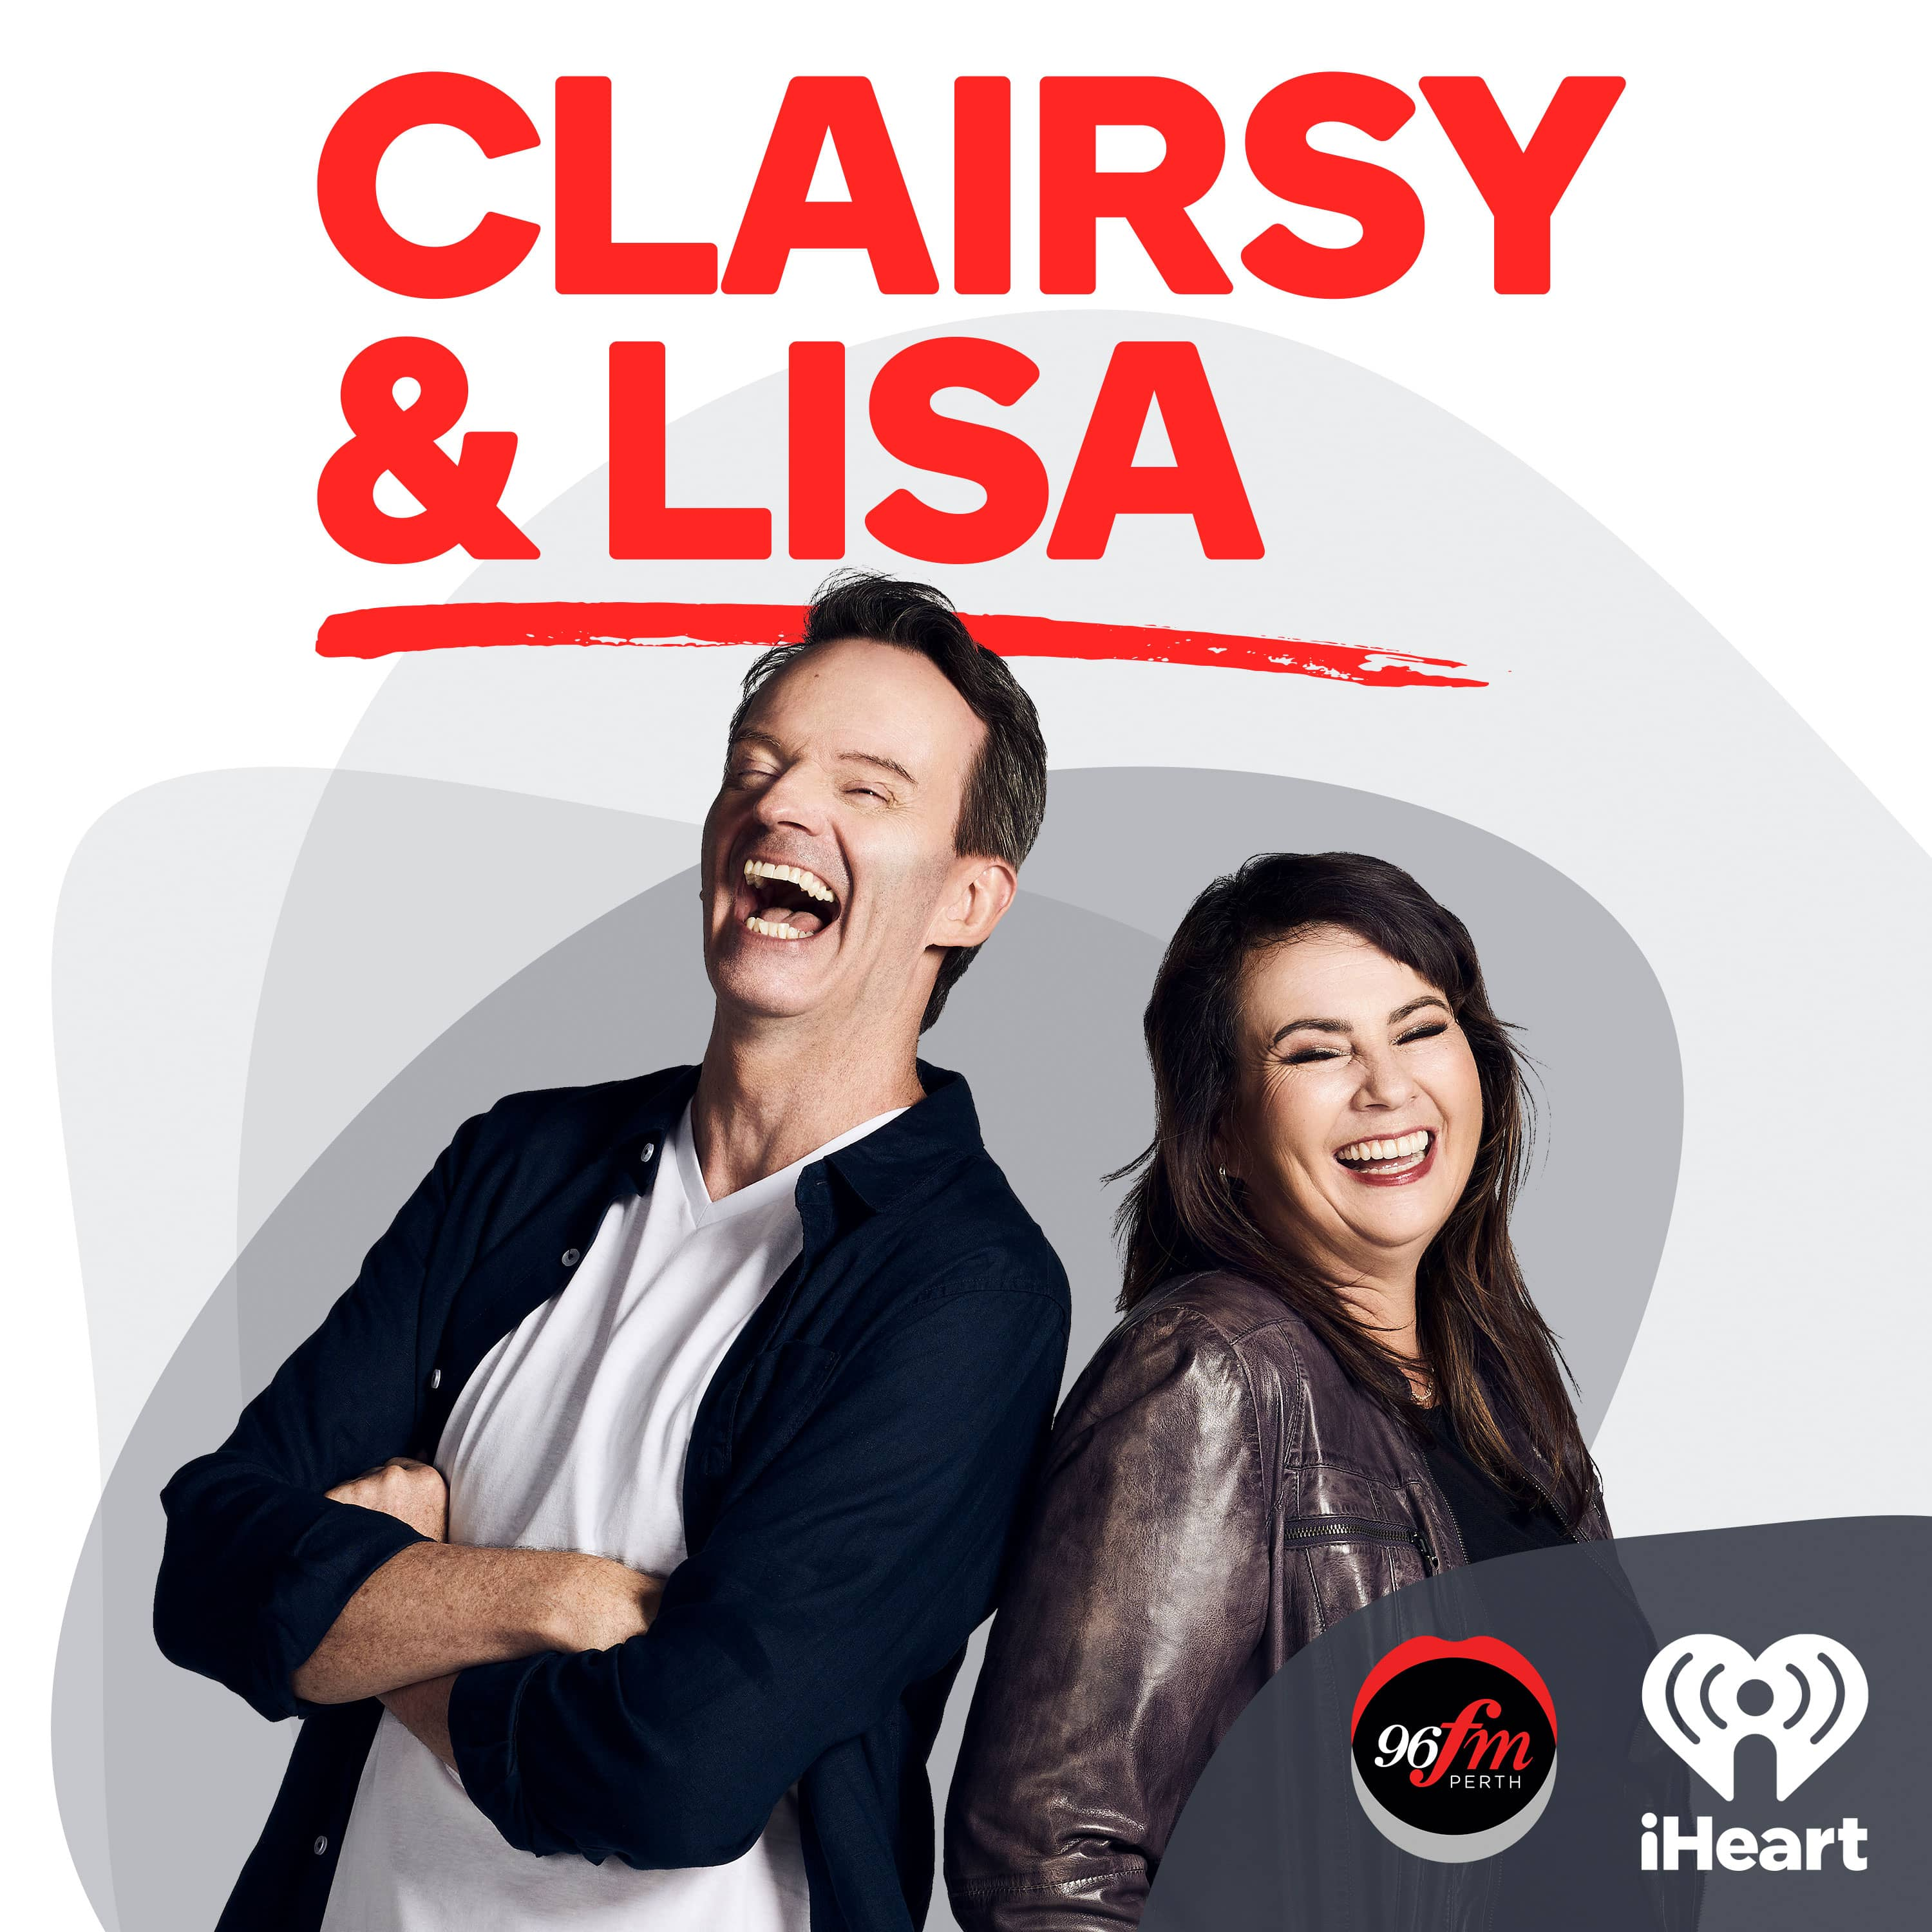 Clairsy & Lisa Rewound July 4